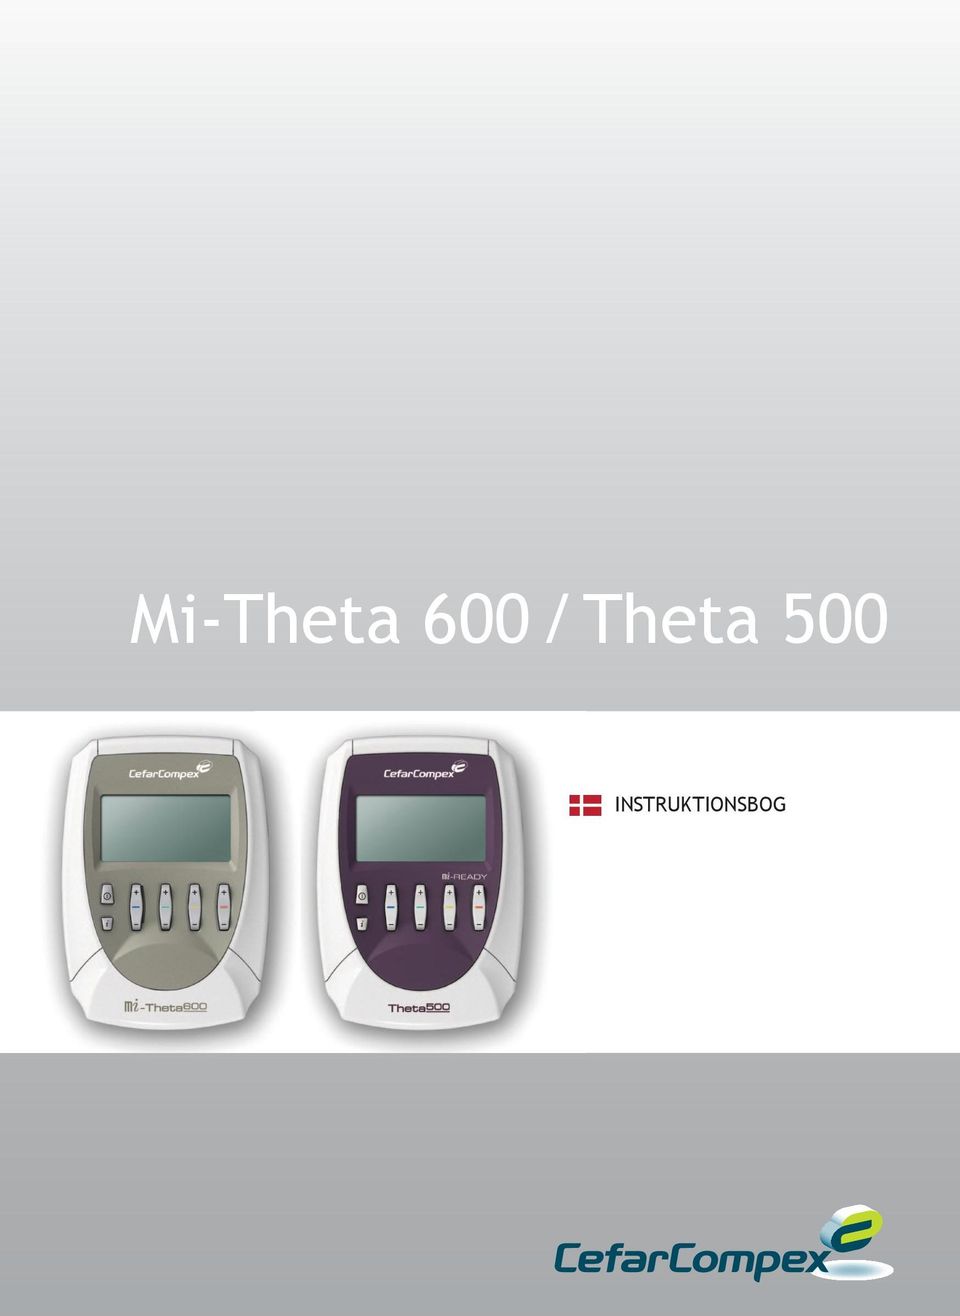 Theta 500